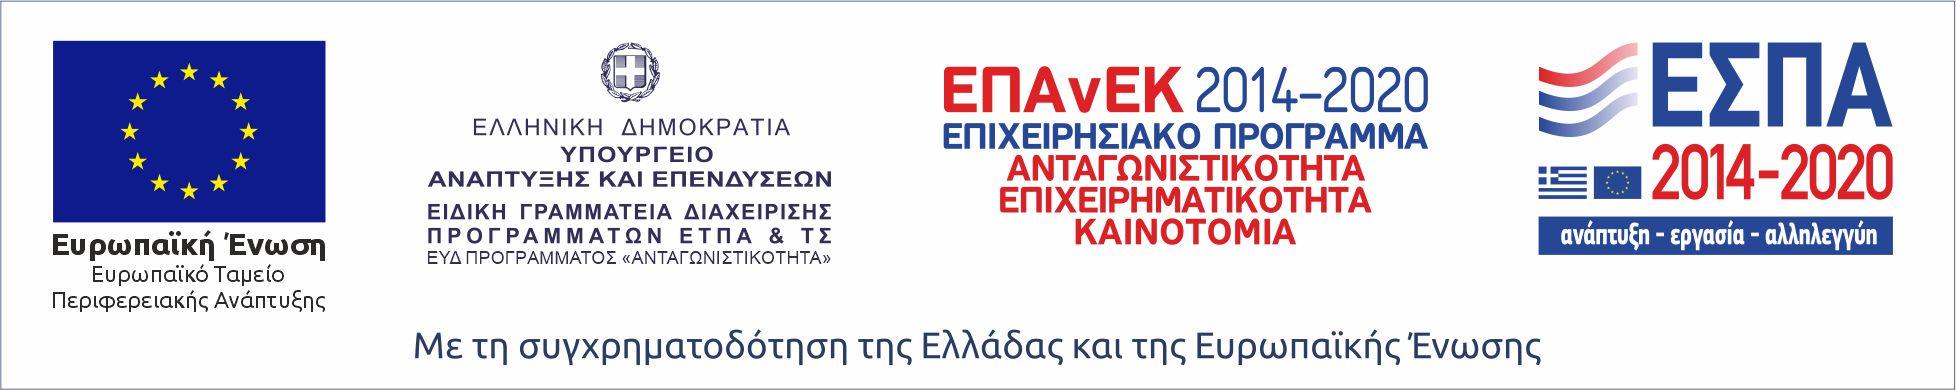 Banner Greek